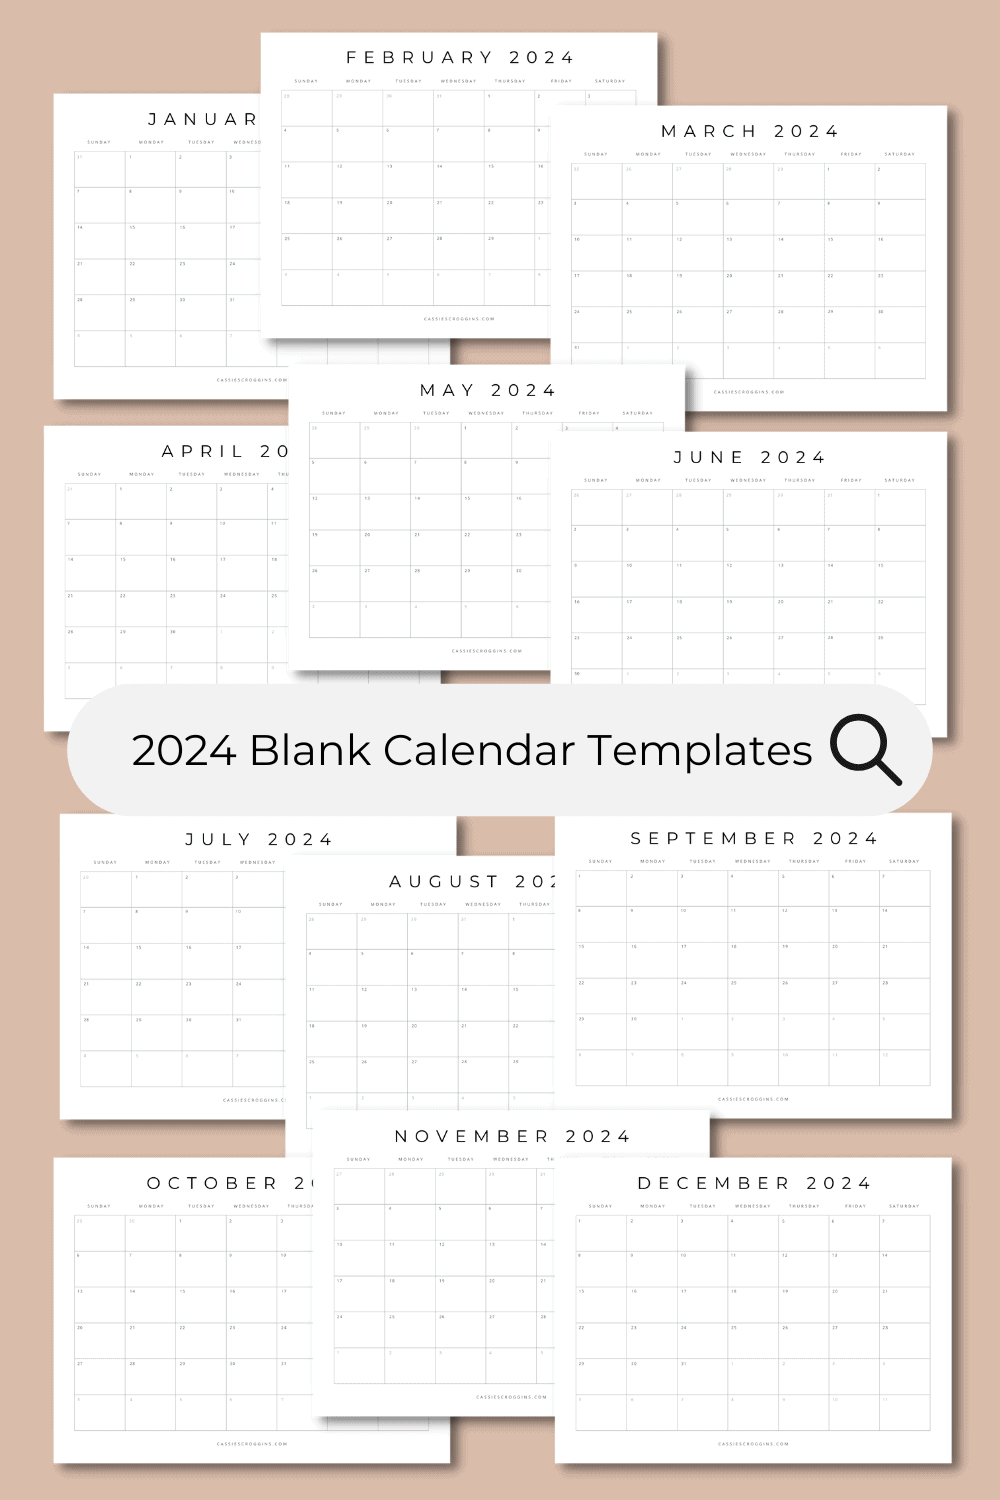 Free Printable 2024 Blank Calendar Templates (All 12 Months) | Free Printable Lined Monthly Calendar 2024